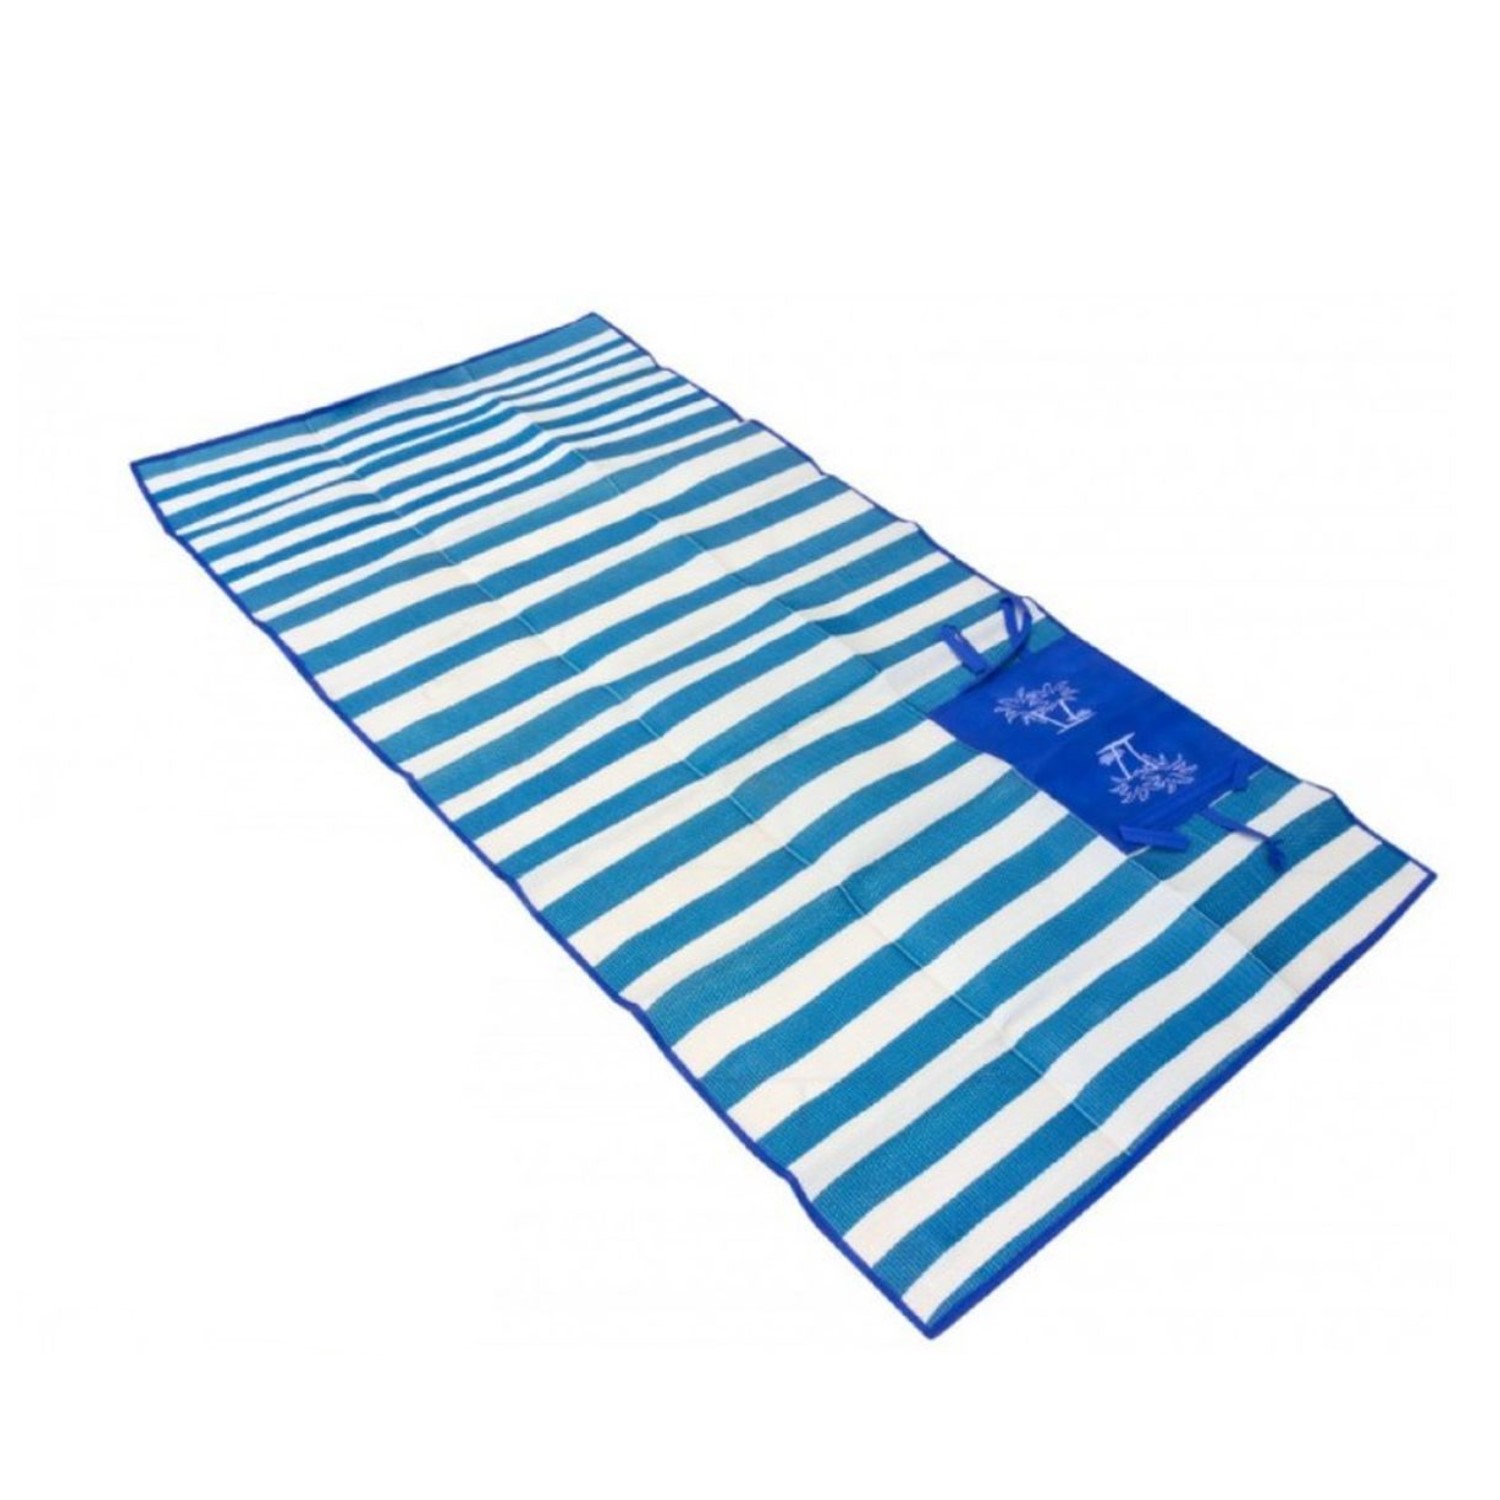 Пляжный коврик Rabizy с ручками для переноски 150х170 см синий - фото 2